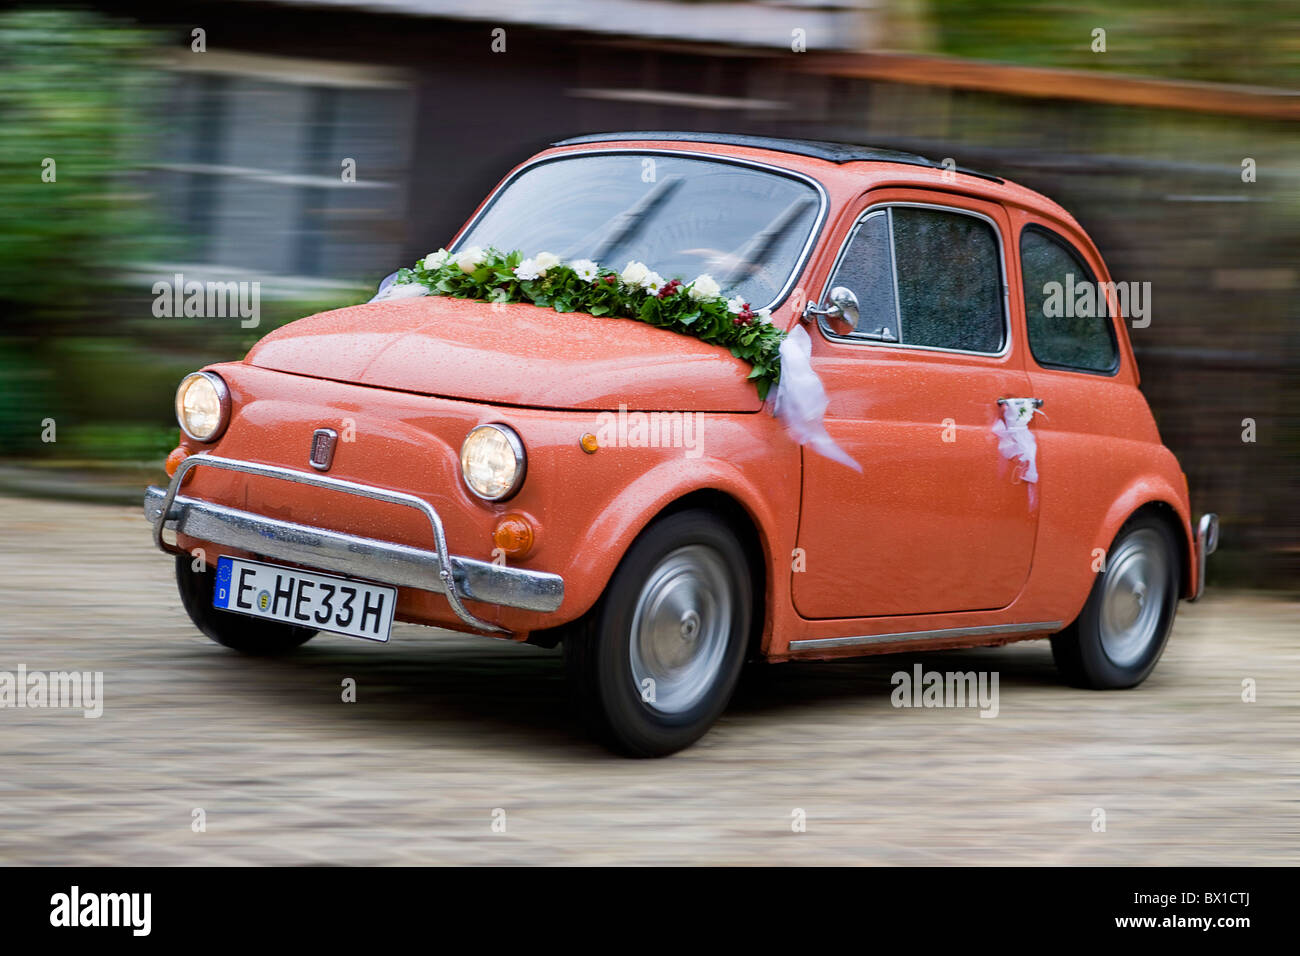 Marriage Fiat 500 wedding car in the rain Stock Photo